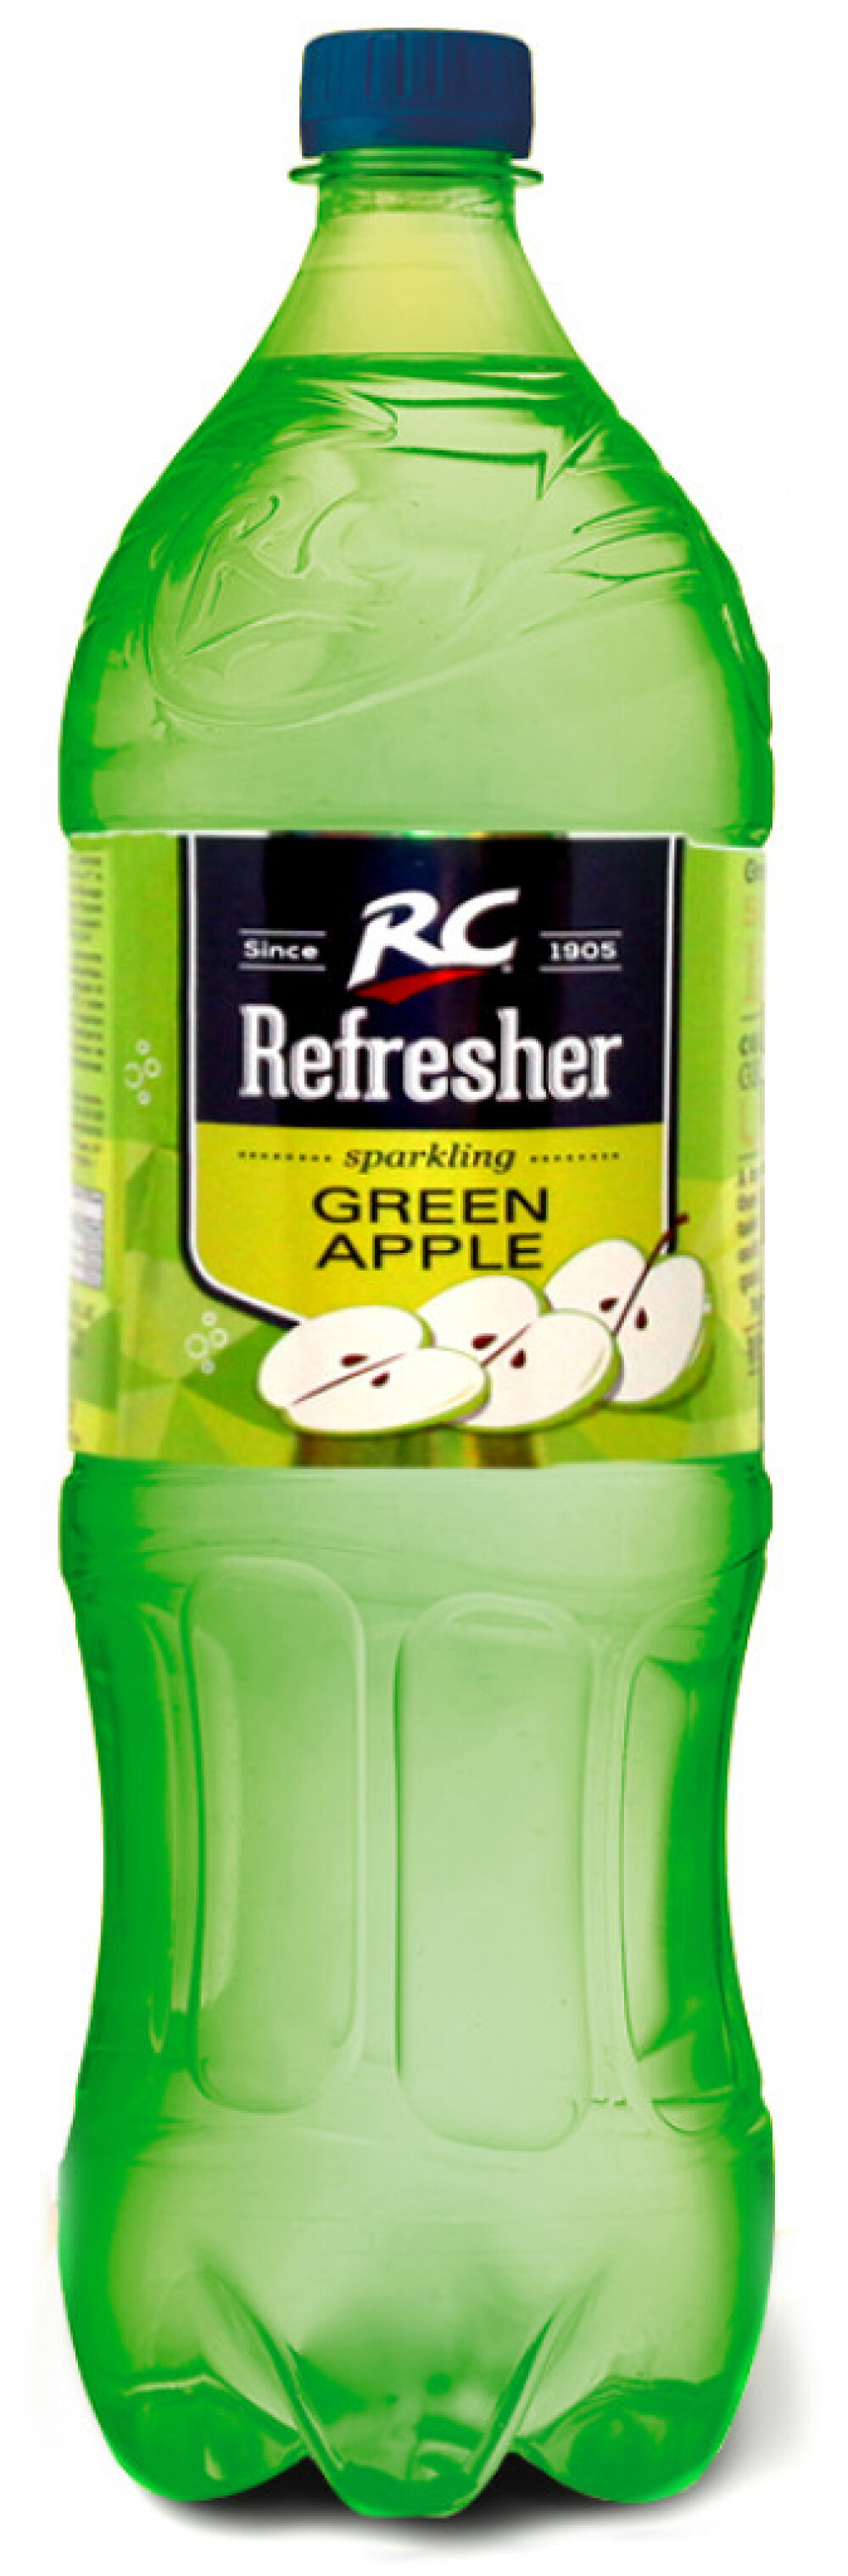 Rc green apple